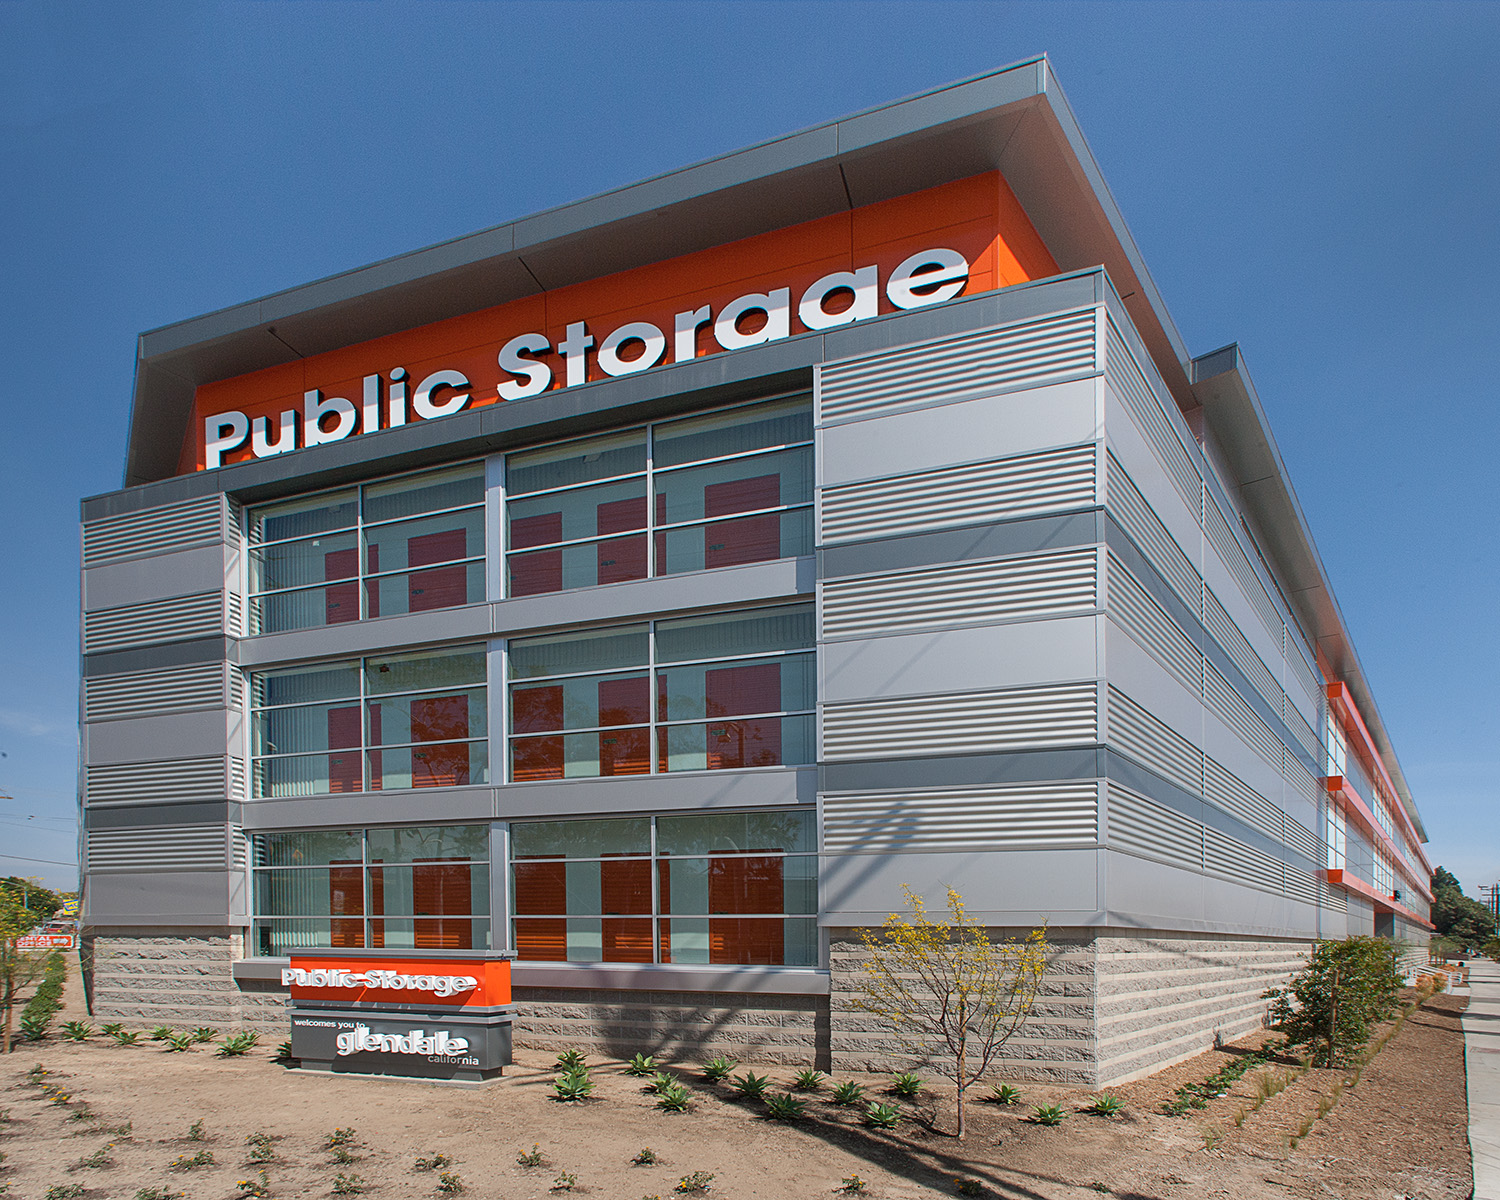 Public Storage (235 of 192)